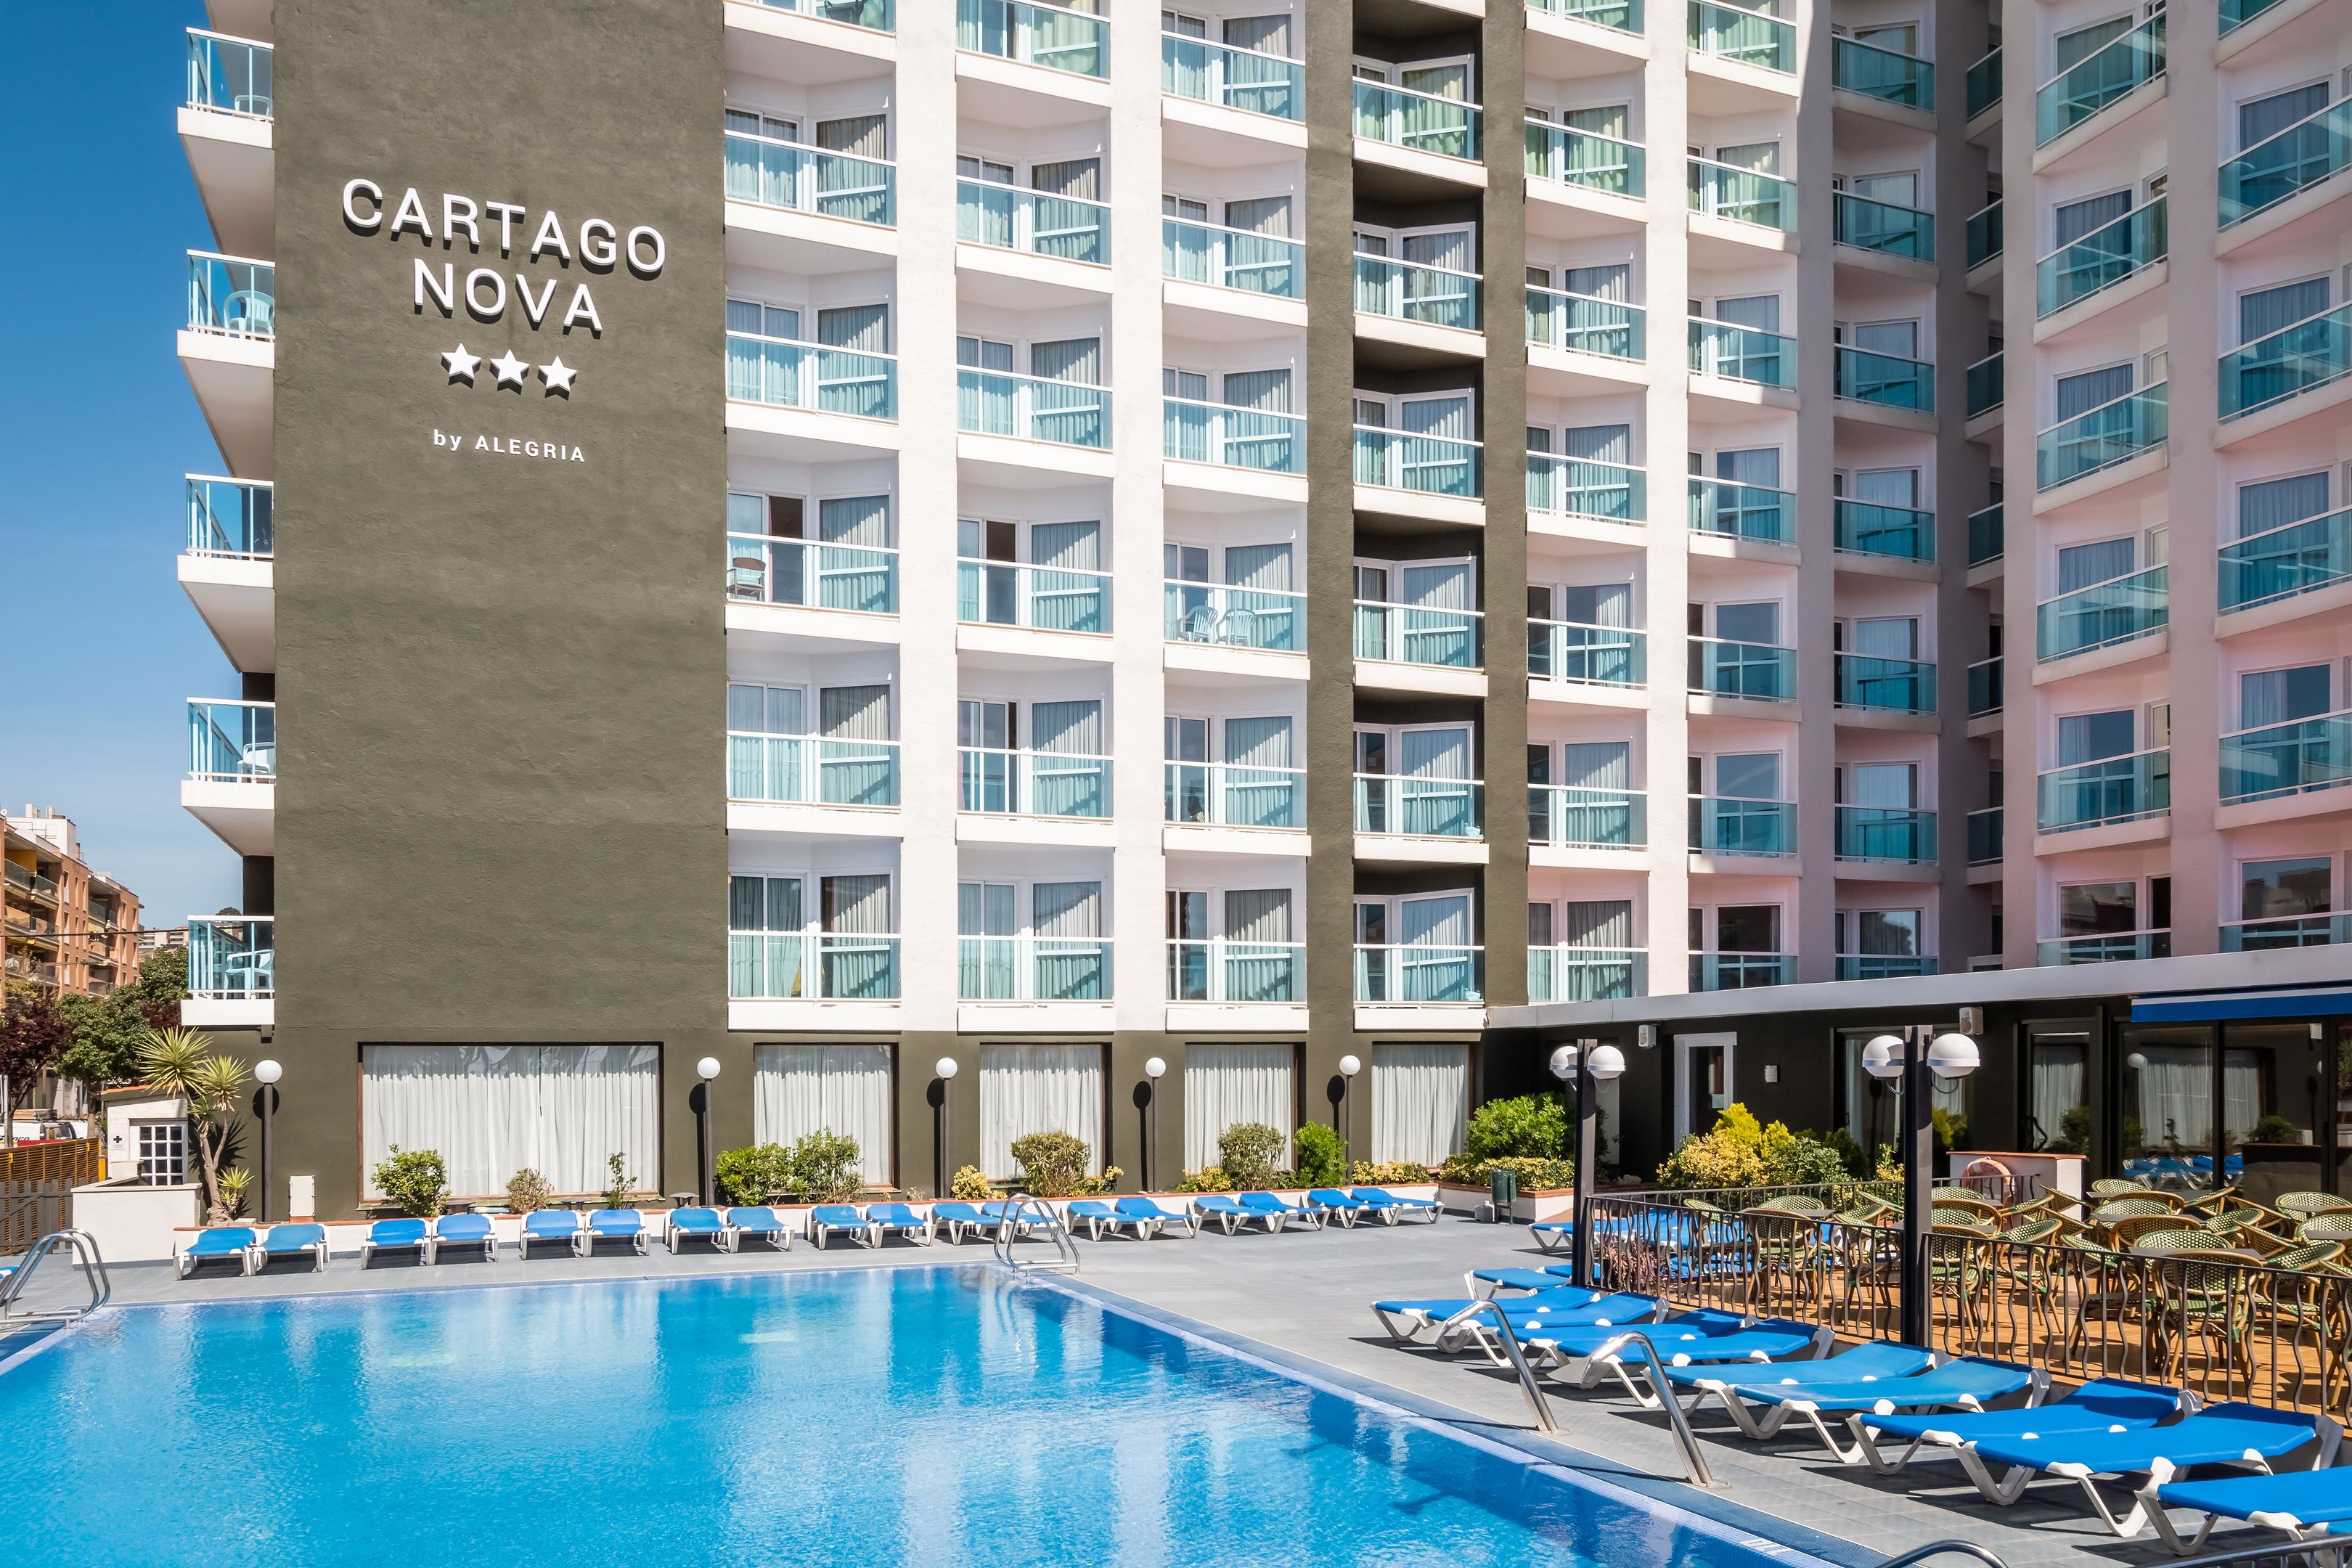 Hotel Cartago Nova by ALEGRIA